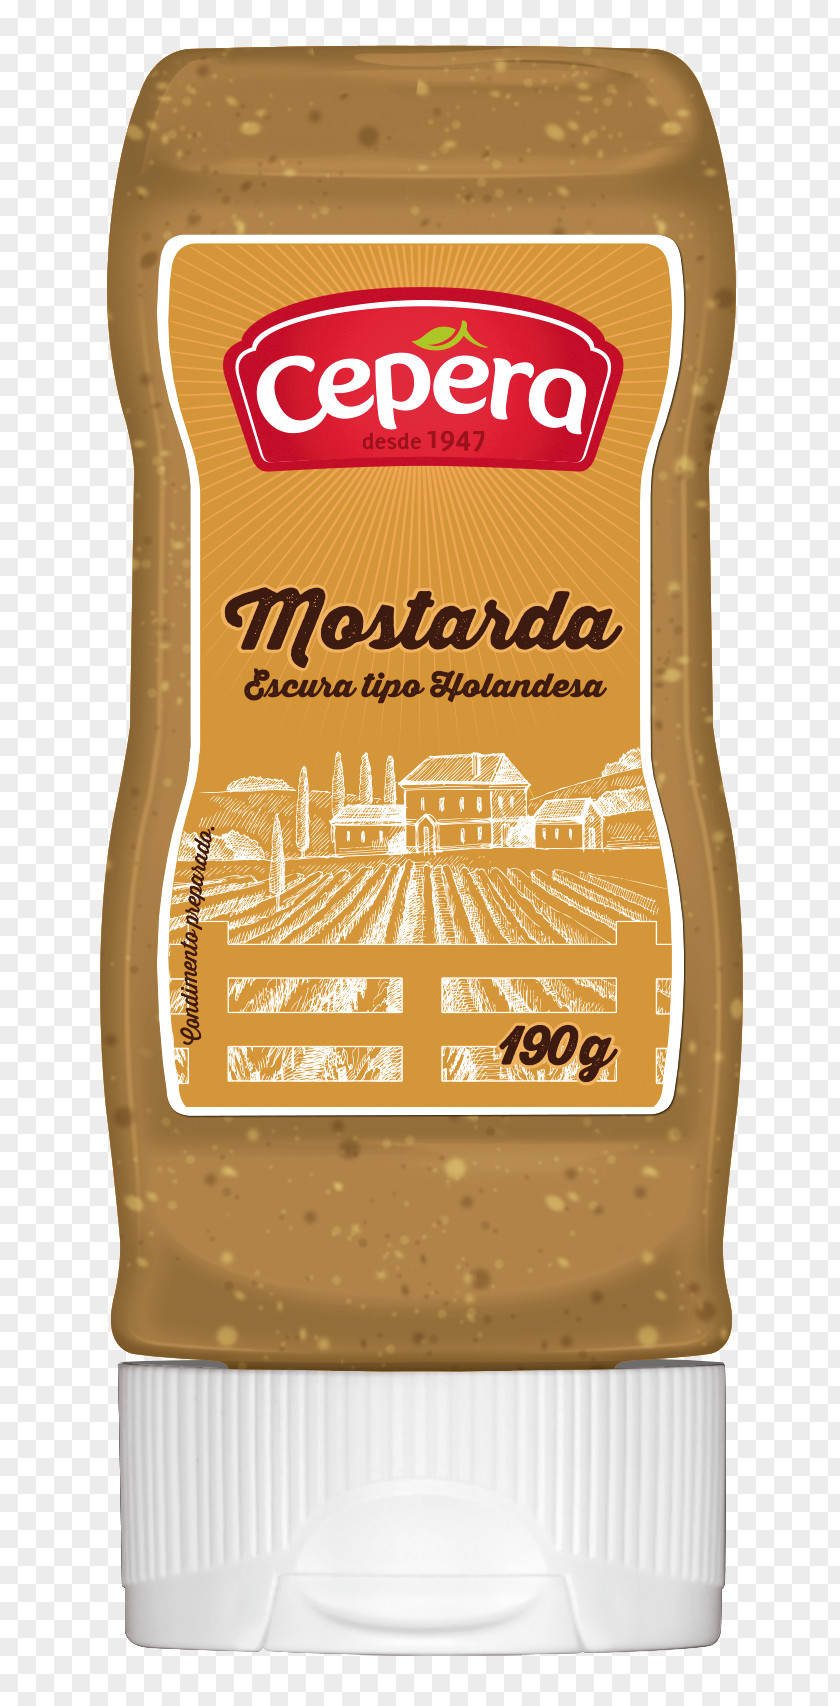 Mostarda Ingredient Mustard Packaging And Labeling Lid PNG